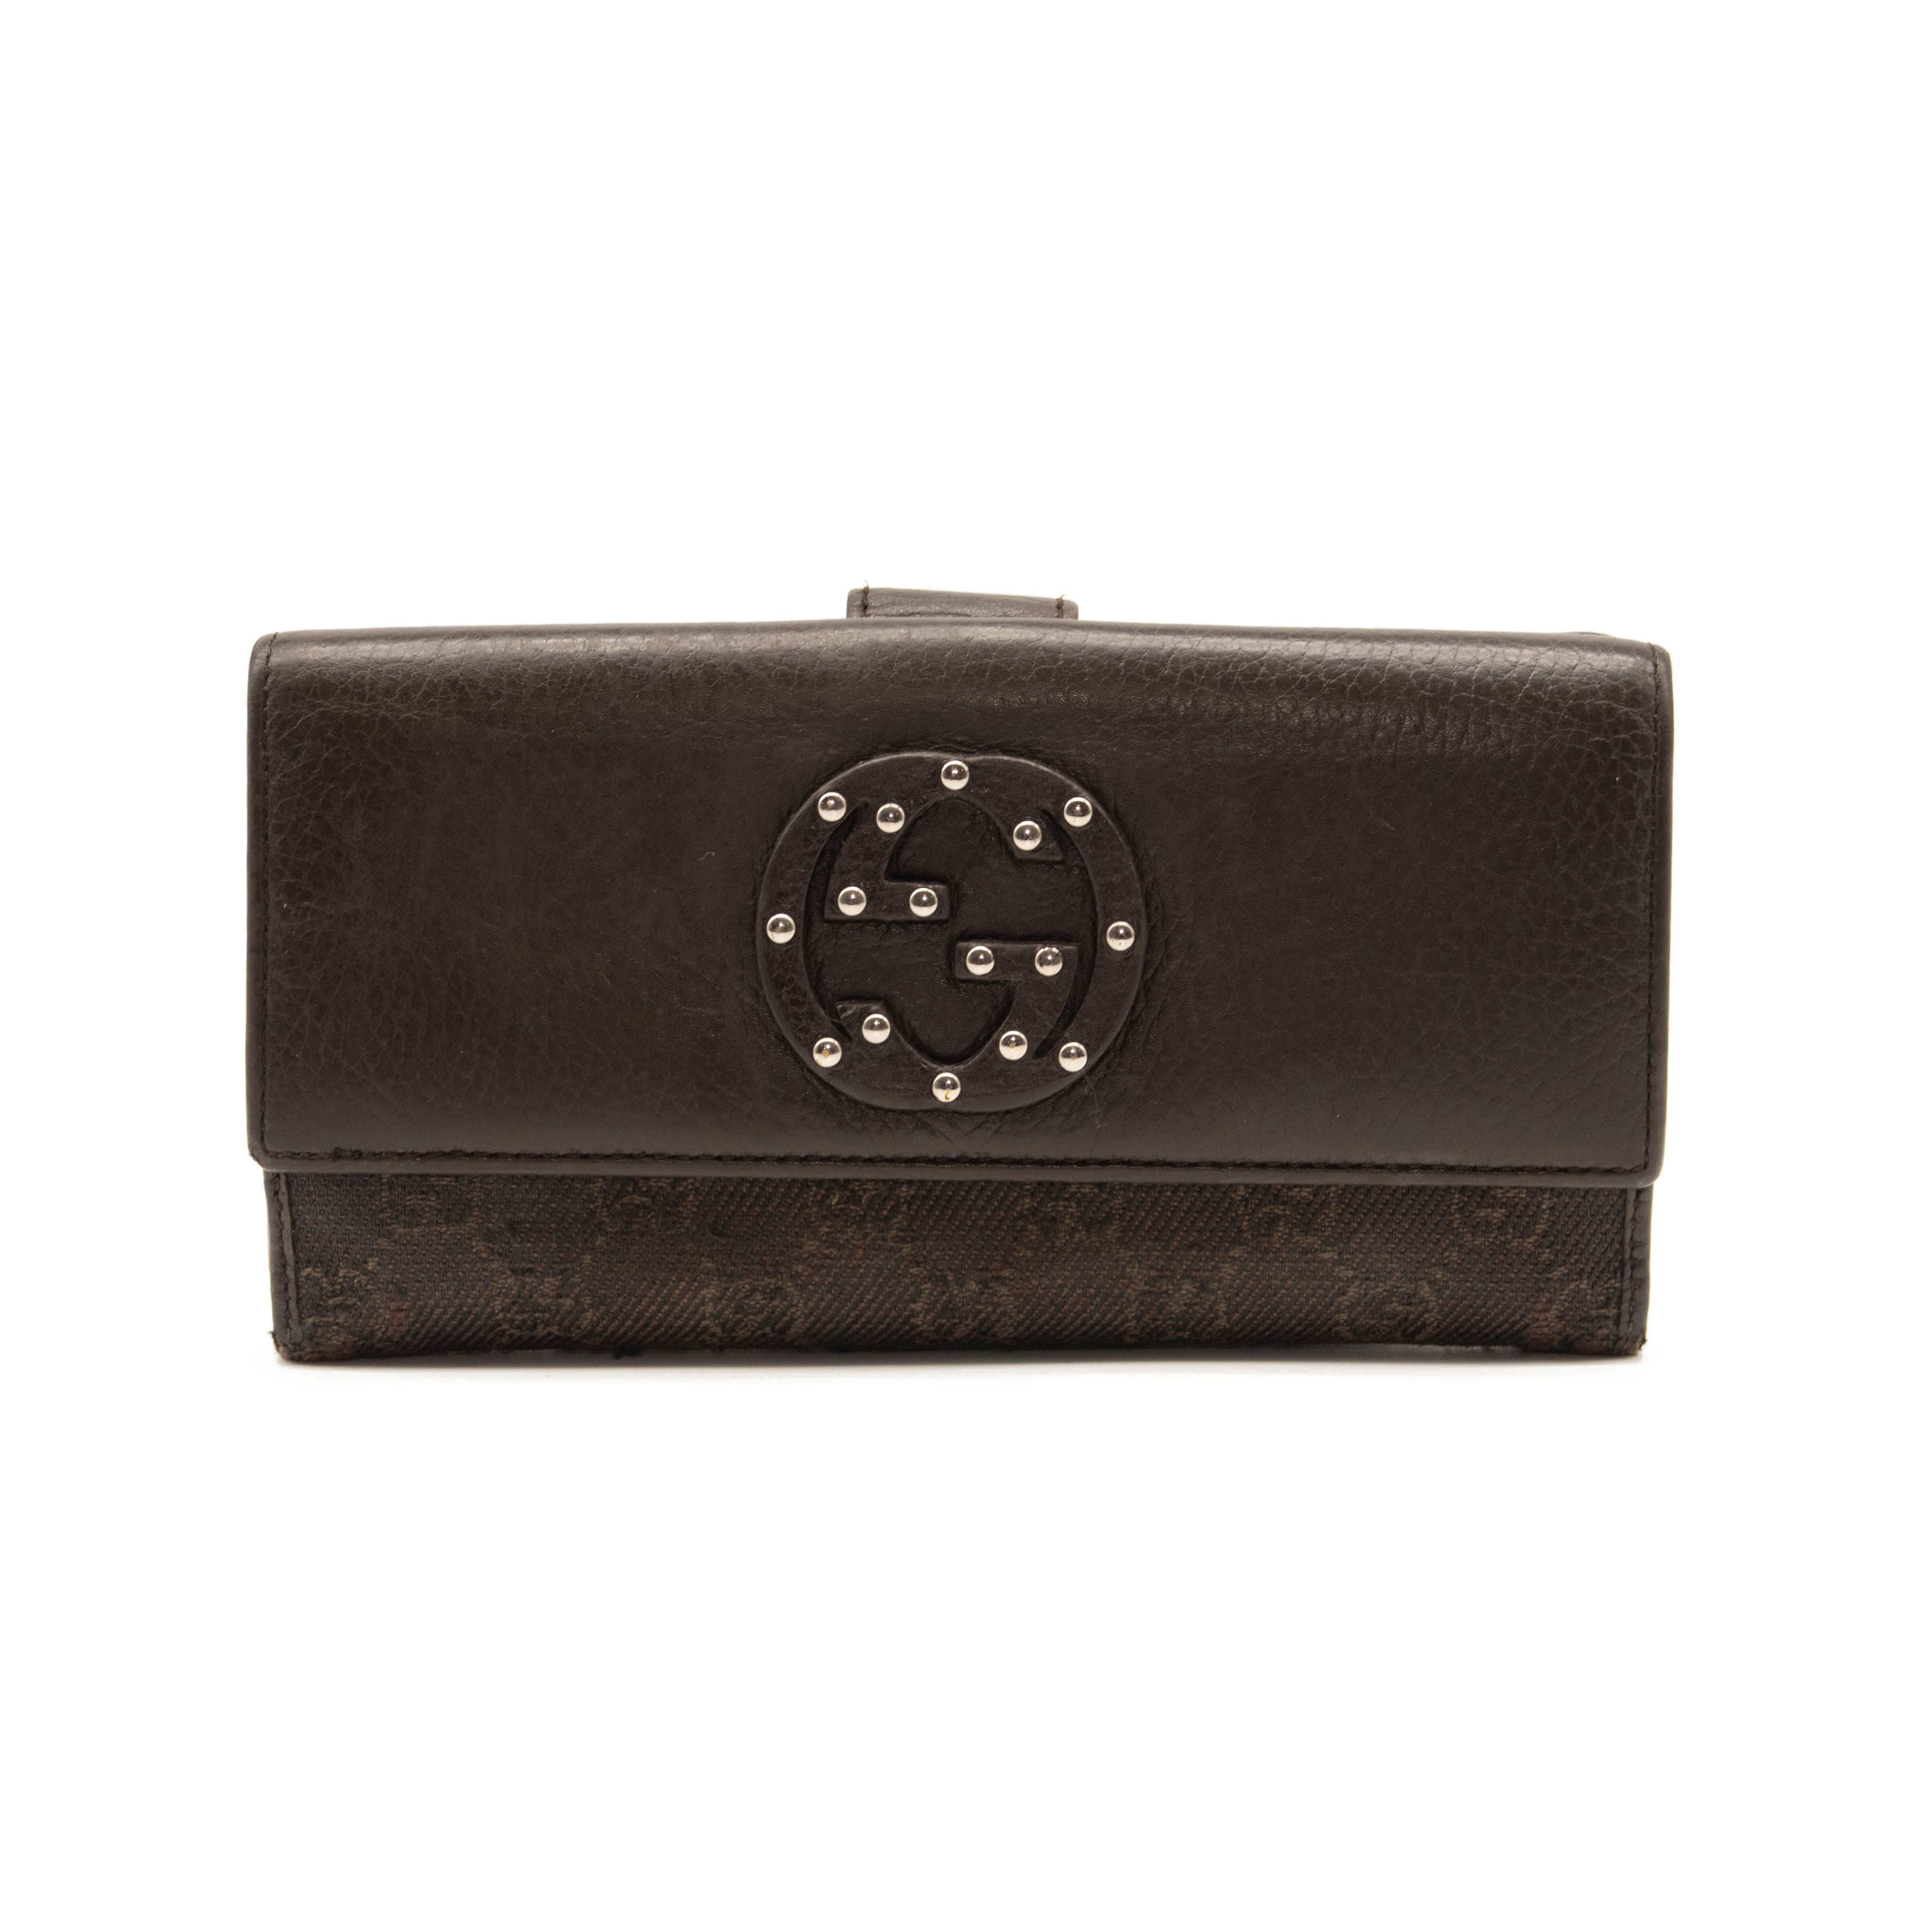 Gucci GG Interlocking Continental Leather Wallet